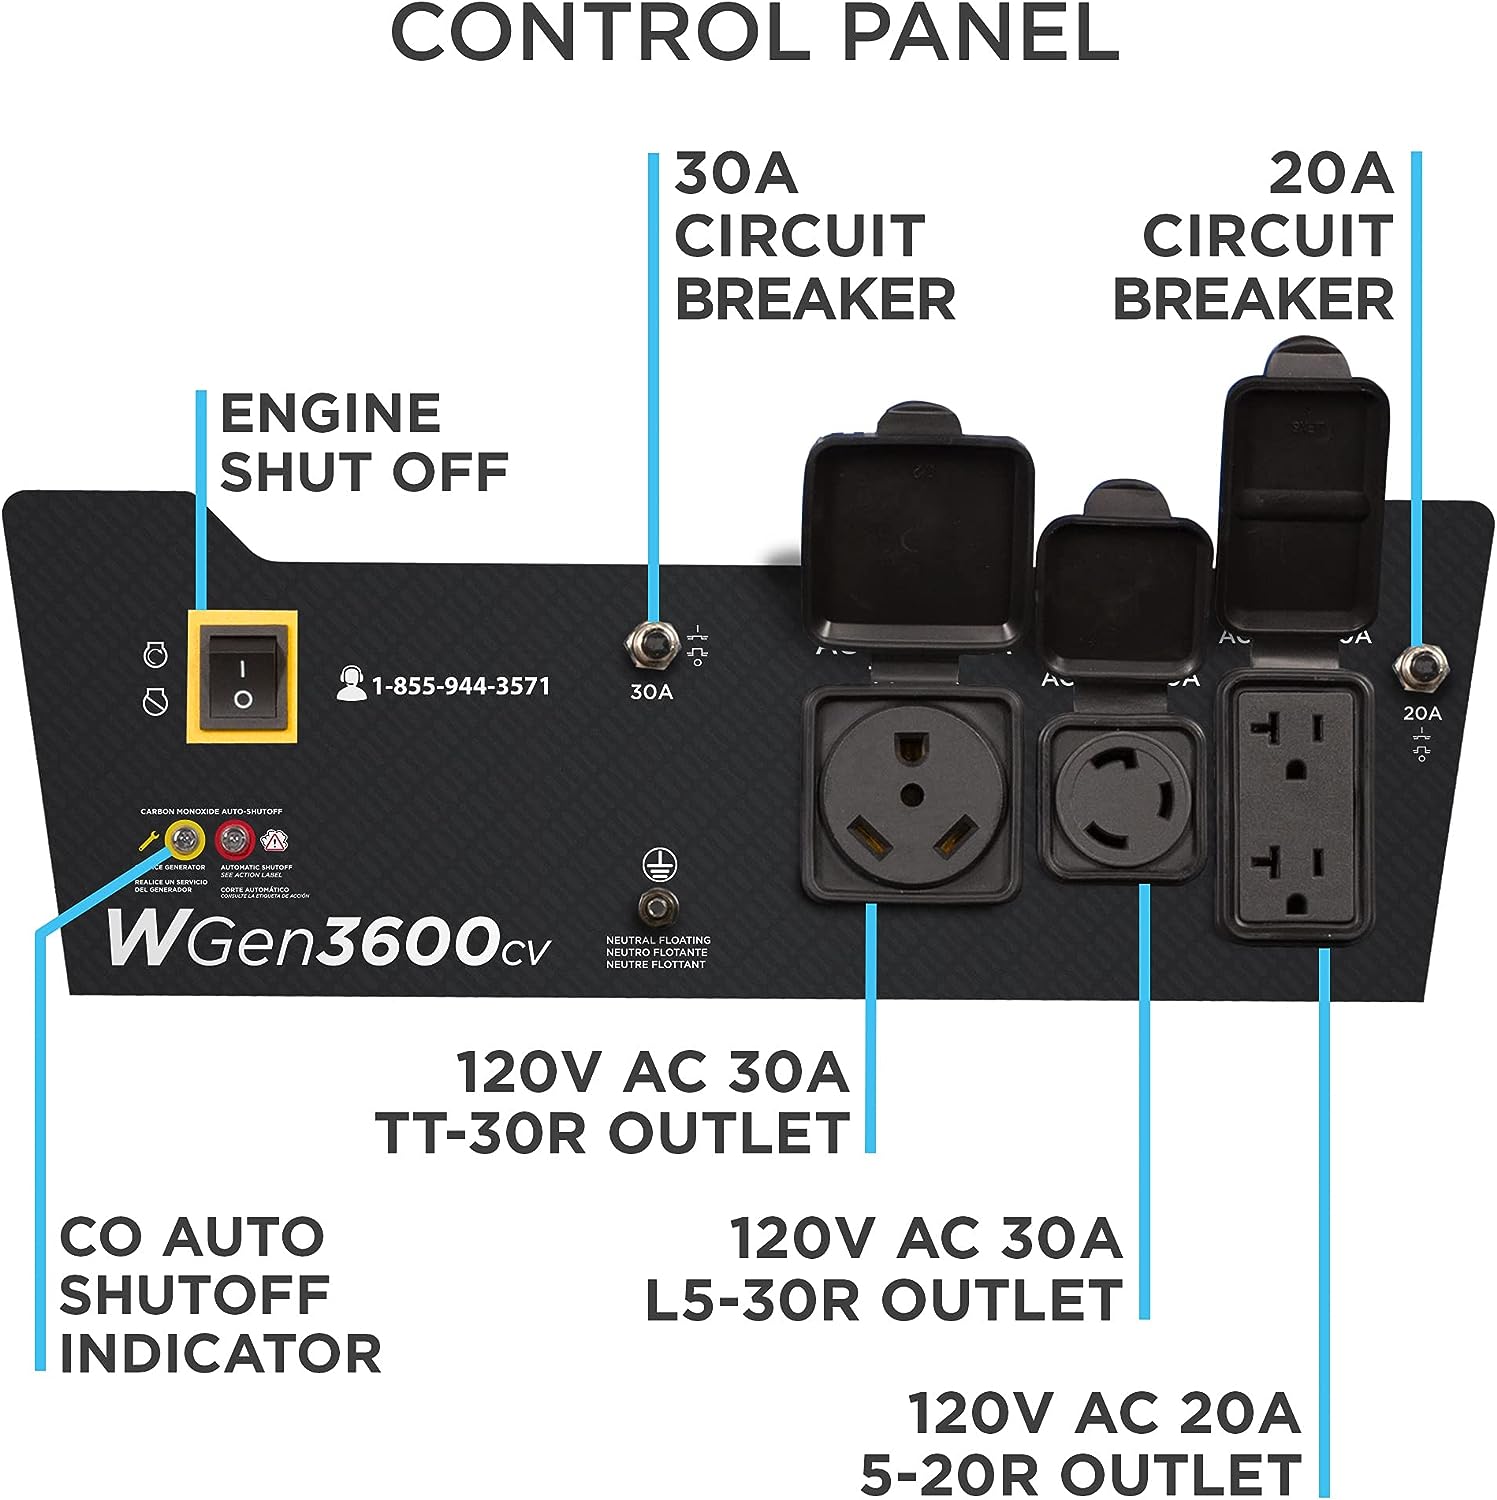 Westinghouse WGen3600c Generator 3600W/4650W 30 Amp Recoil Start Gas with CO Sensor New